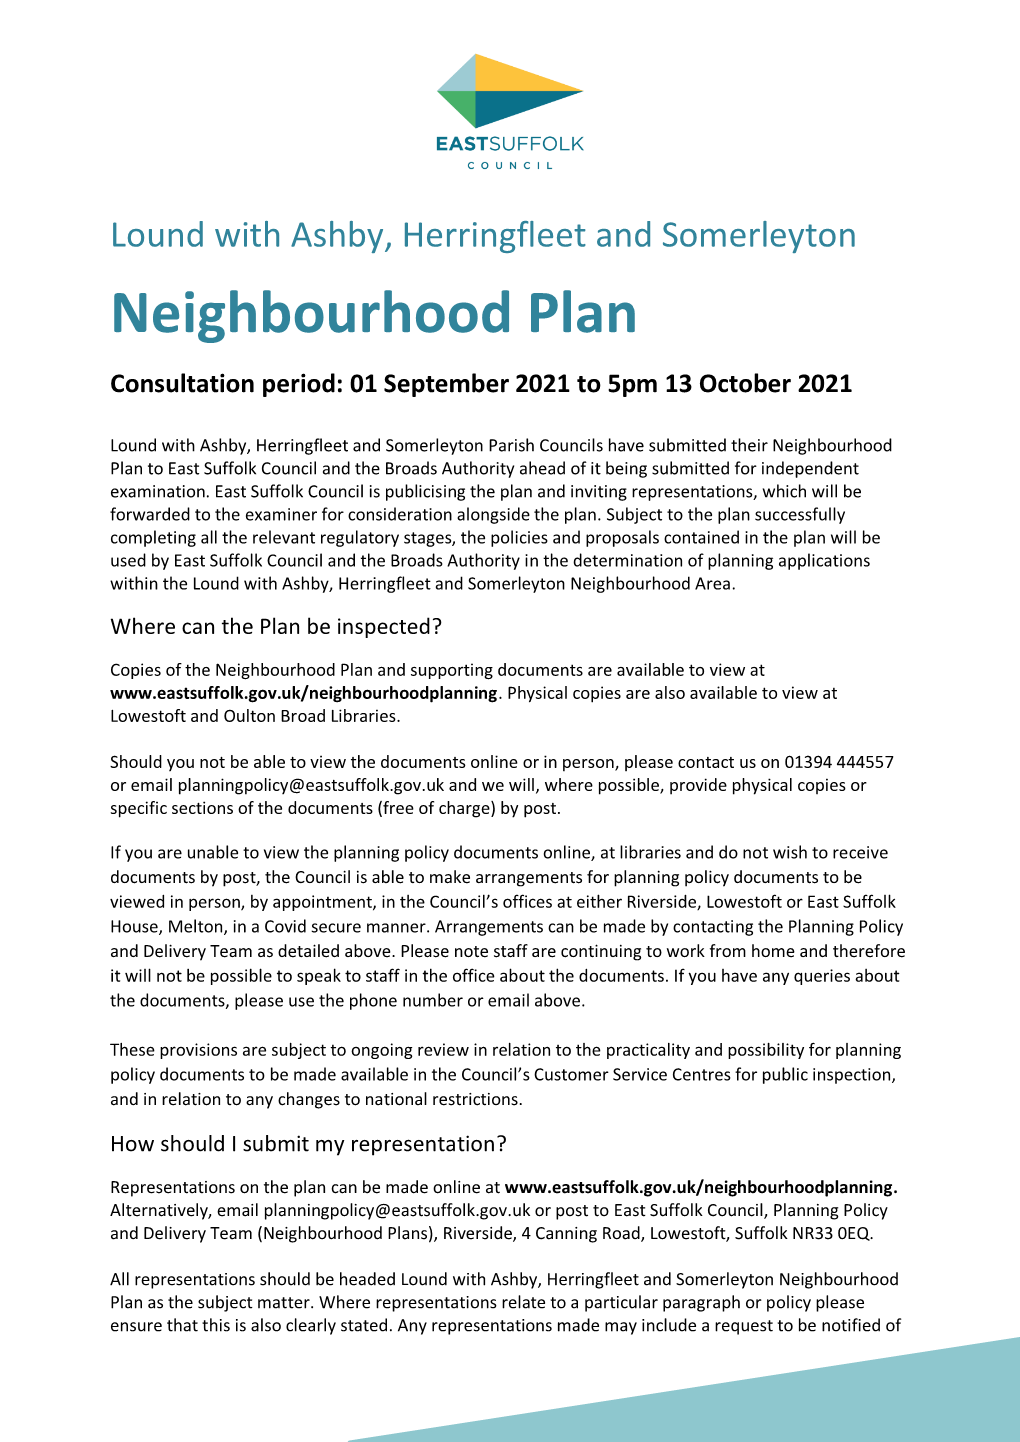 Neighbourhood Plan Consultation Period: 01 September 2021 to 5Pm 13 October 2021